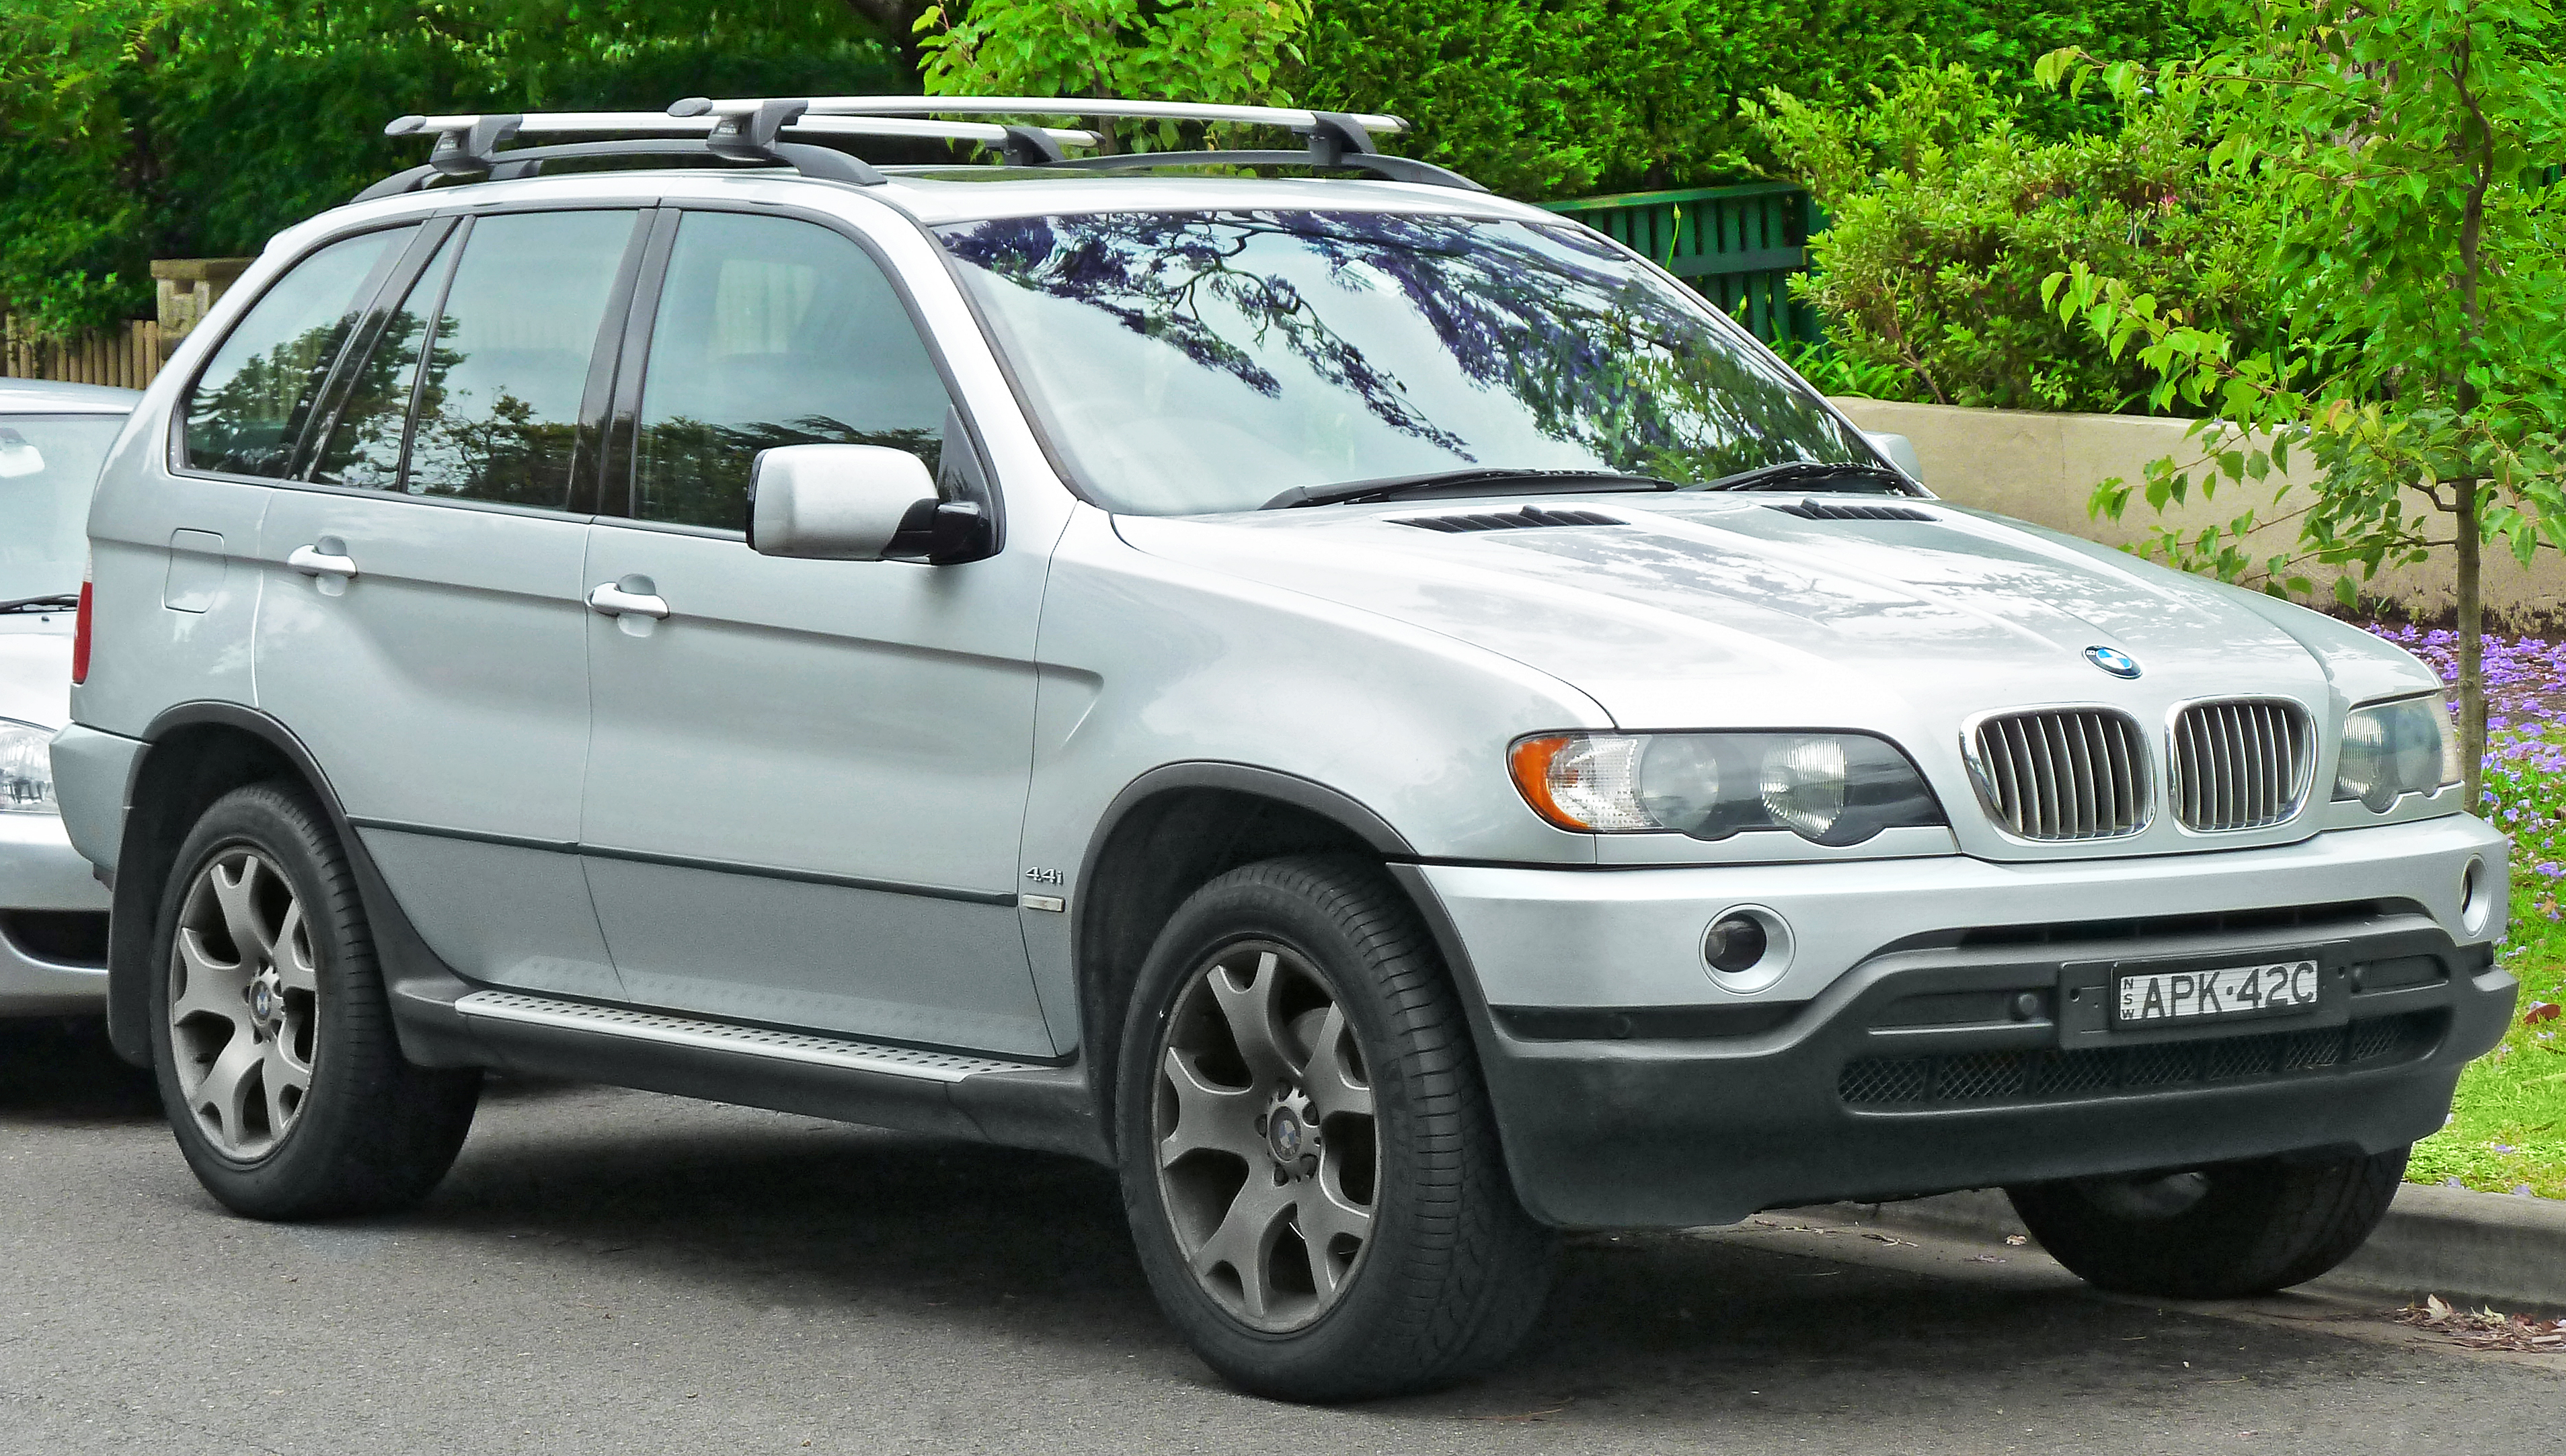 File:2000-2003 BMW X5 (E53) 4.4i wagon (2011-11-18).jpg - Wikimedia Commons